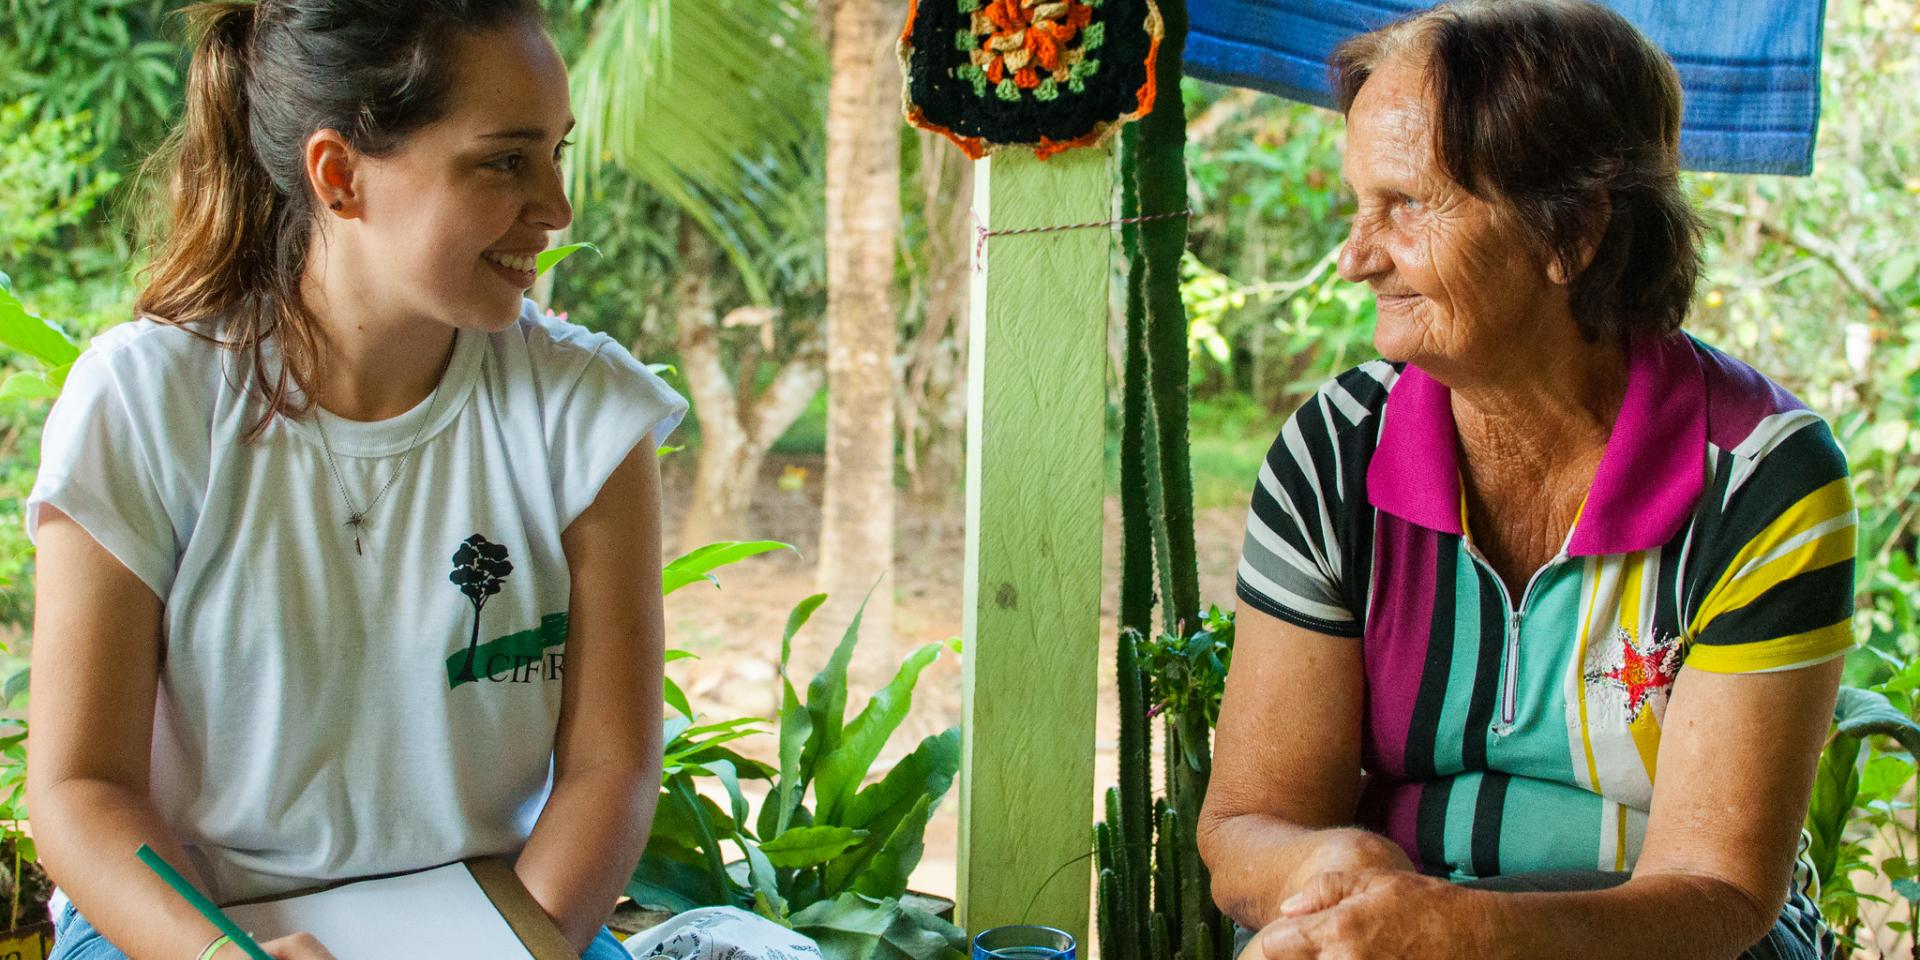 Entrevistadora Raisa aplicando o questionário para Dona Linda, moradora antiga do assentamento.     Photo by Icaro Cooke Vieira/CIFOR